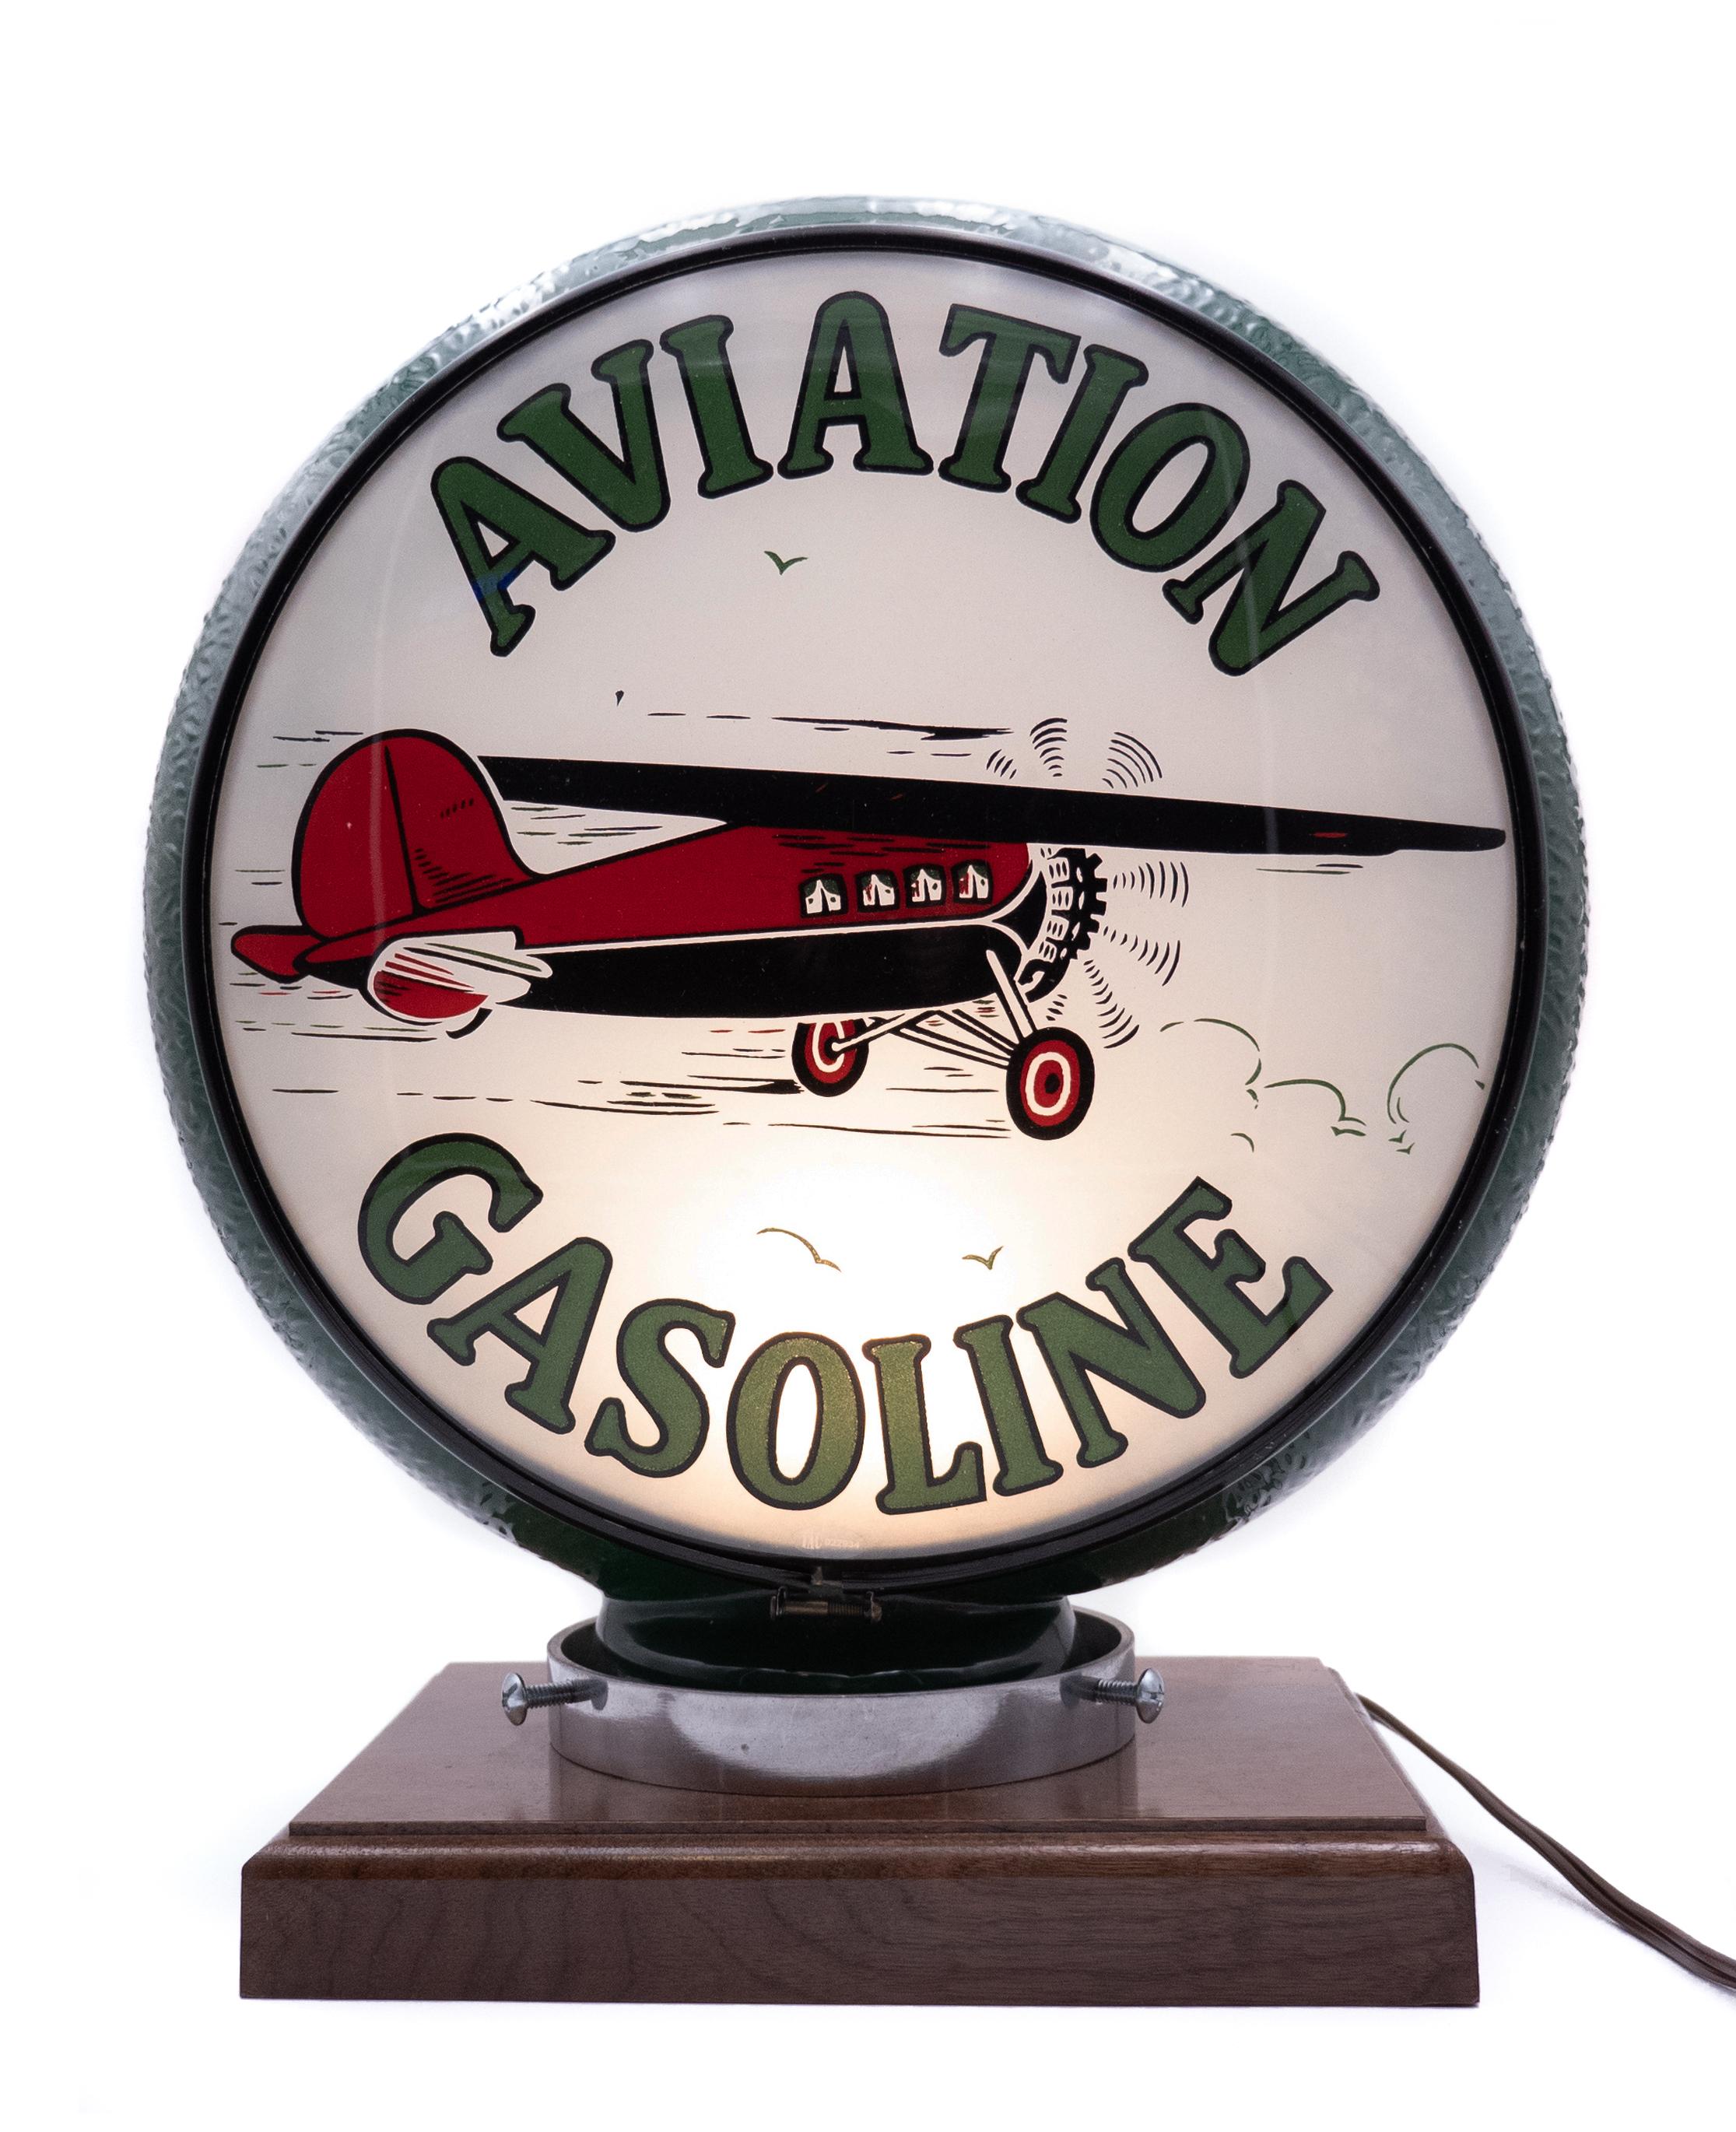 Aviation Gasoline w/ Airplane Logo Single Lens Gill Globe TAC 8.9